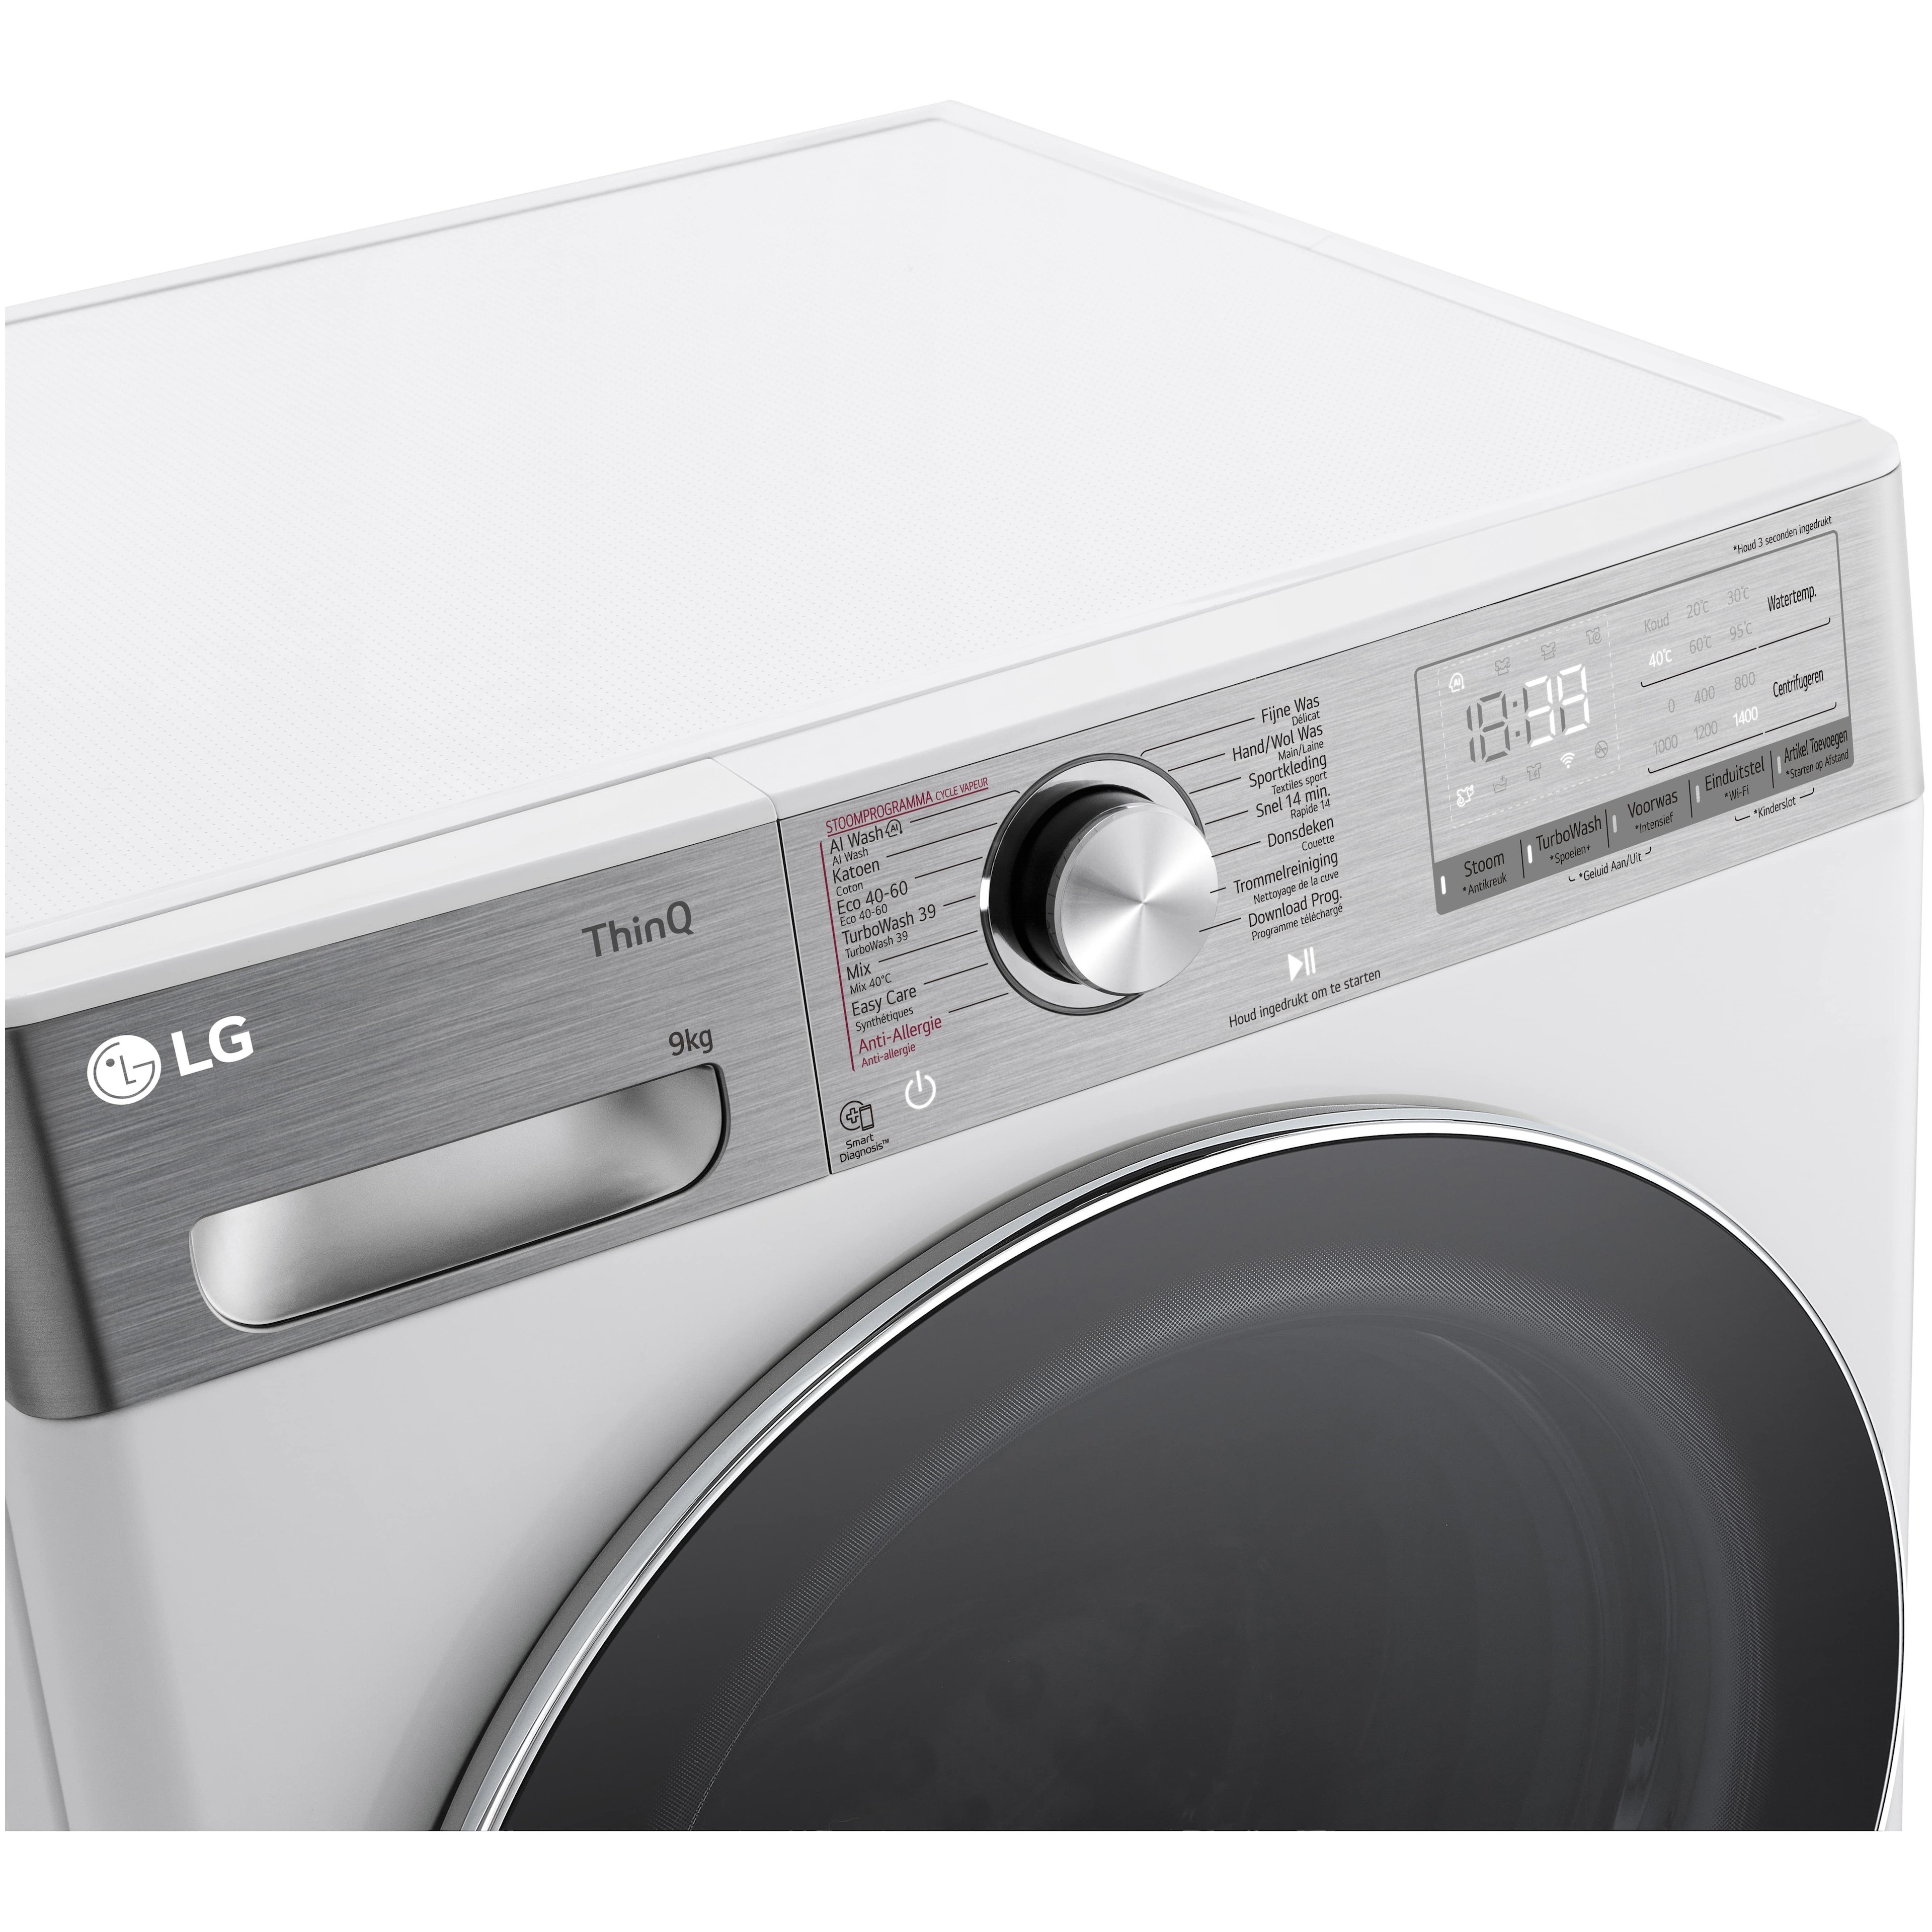 LG wasmachine F4WR9009S2W afbeelding 3